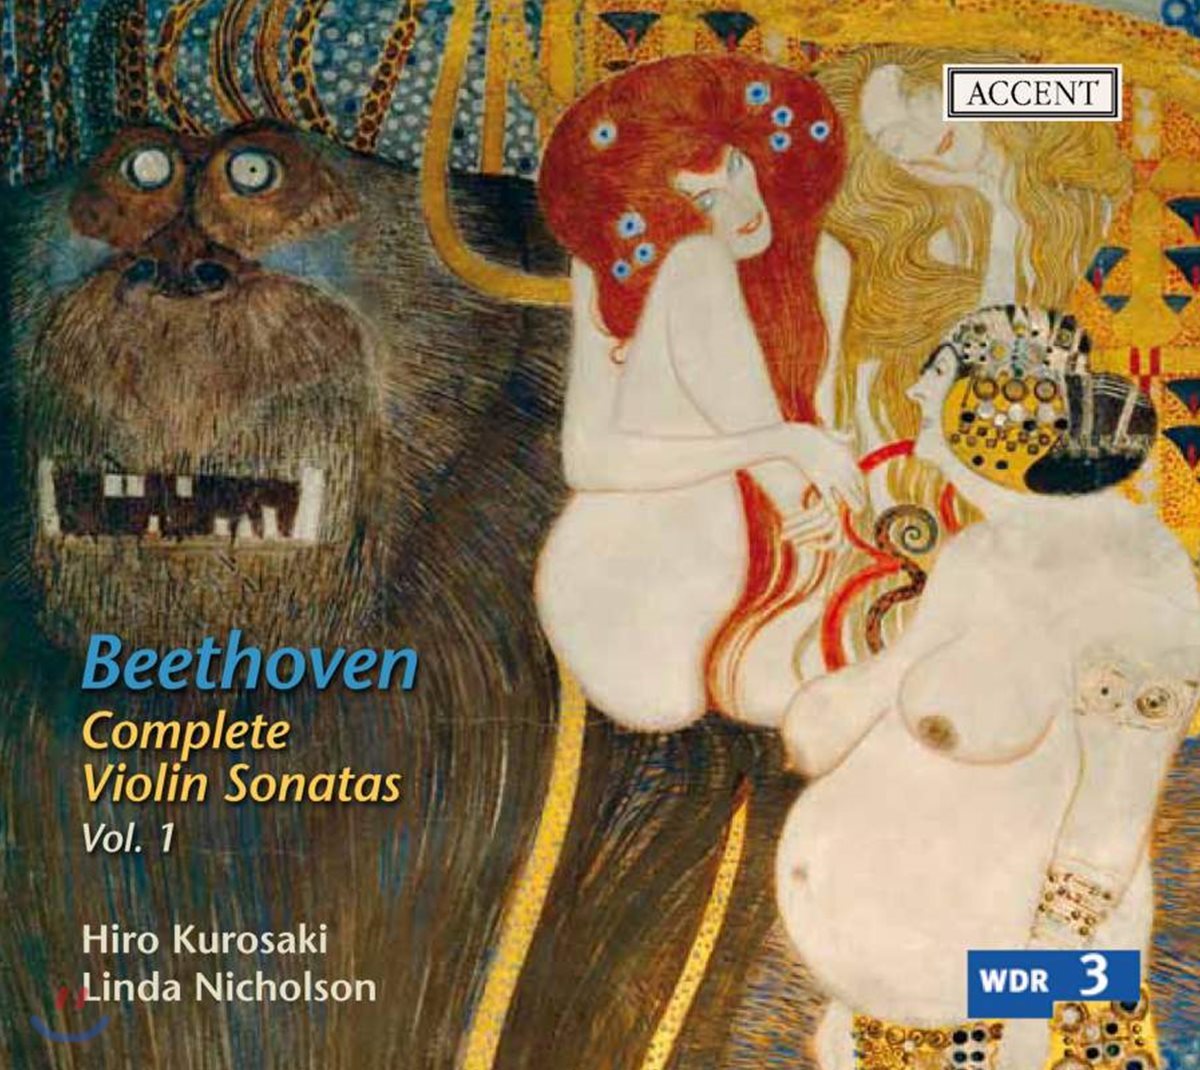 Hiro Kurosaki 베토벤: 바이올린 소나타 1집 - 히로 쿠로사키 (Beethoven: Complete Violin Sonatas Vol.1)